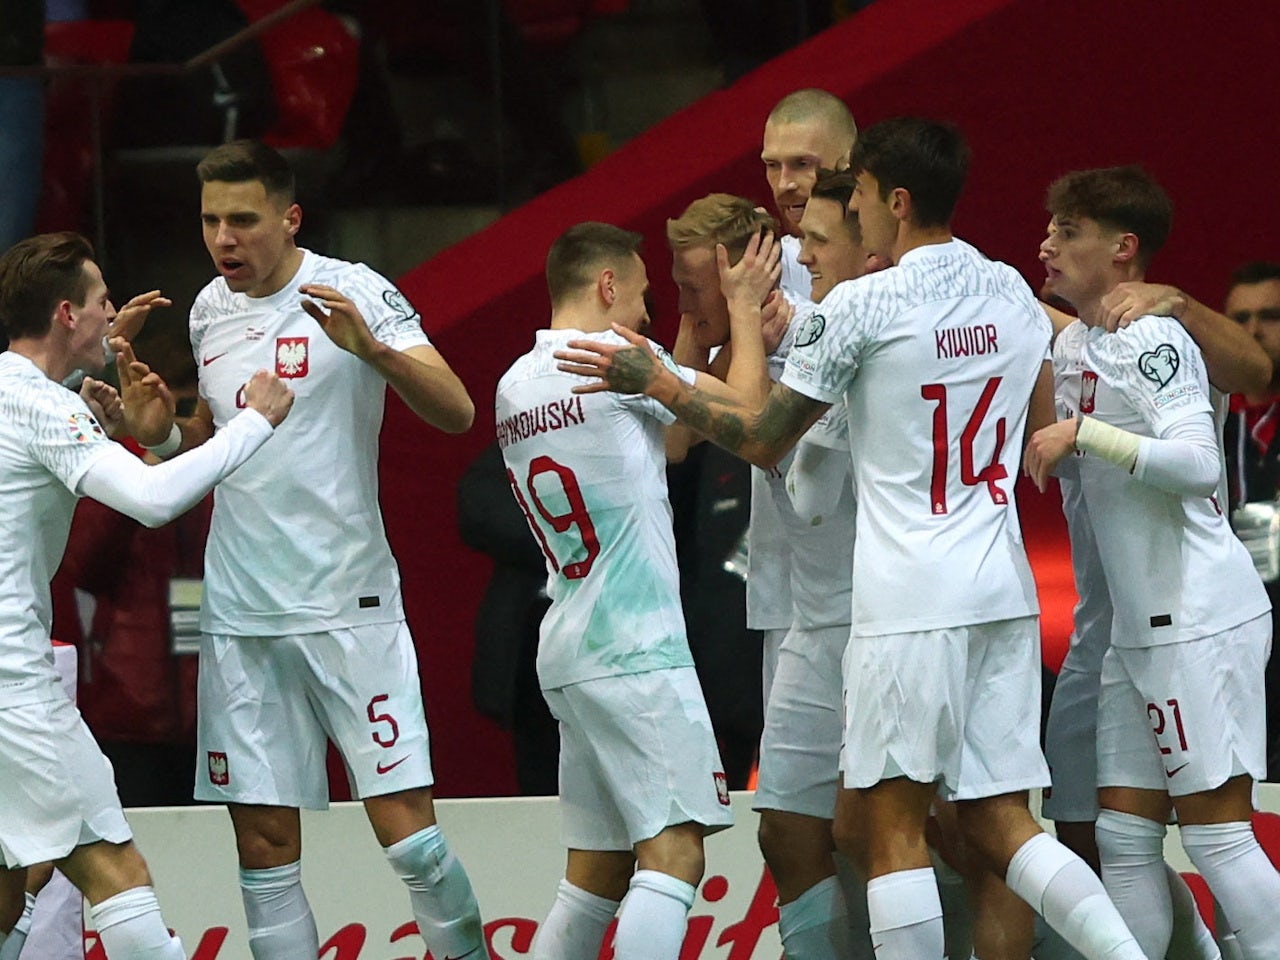 Preview: Poland vs. Moldova - prediction, team news, lineups